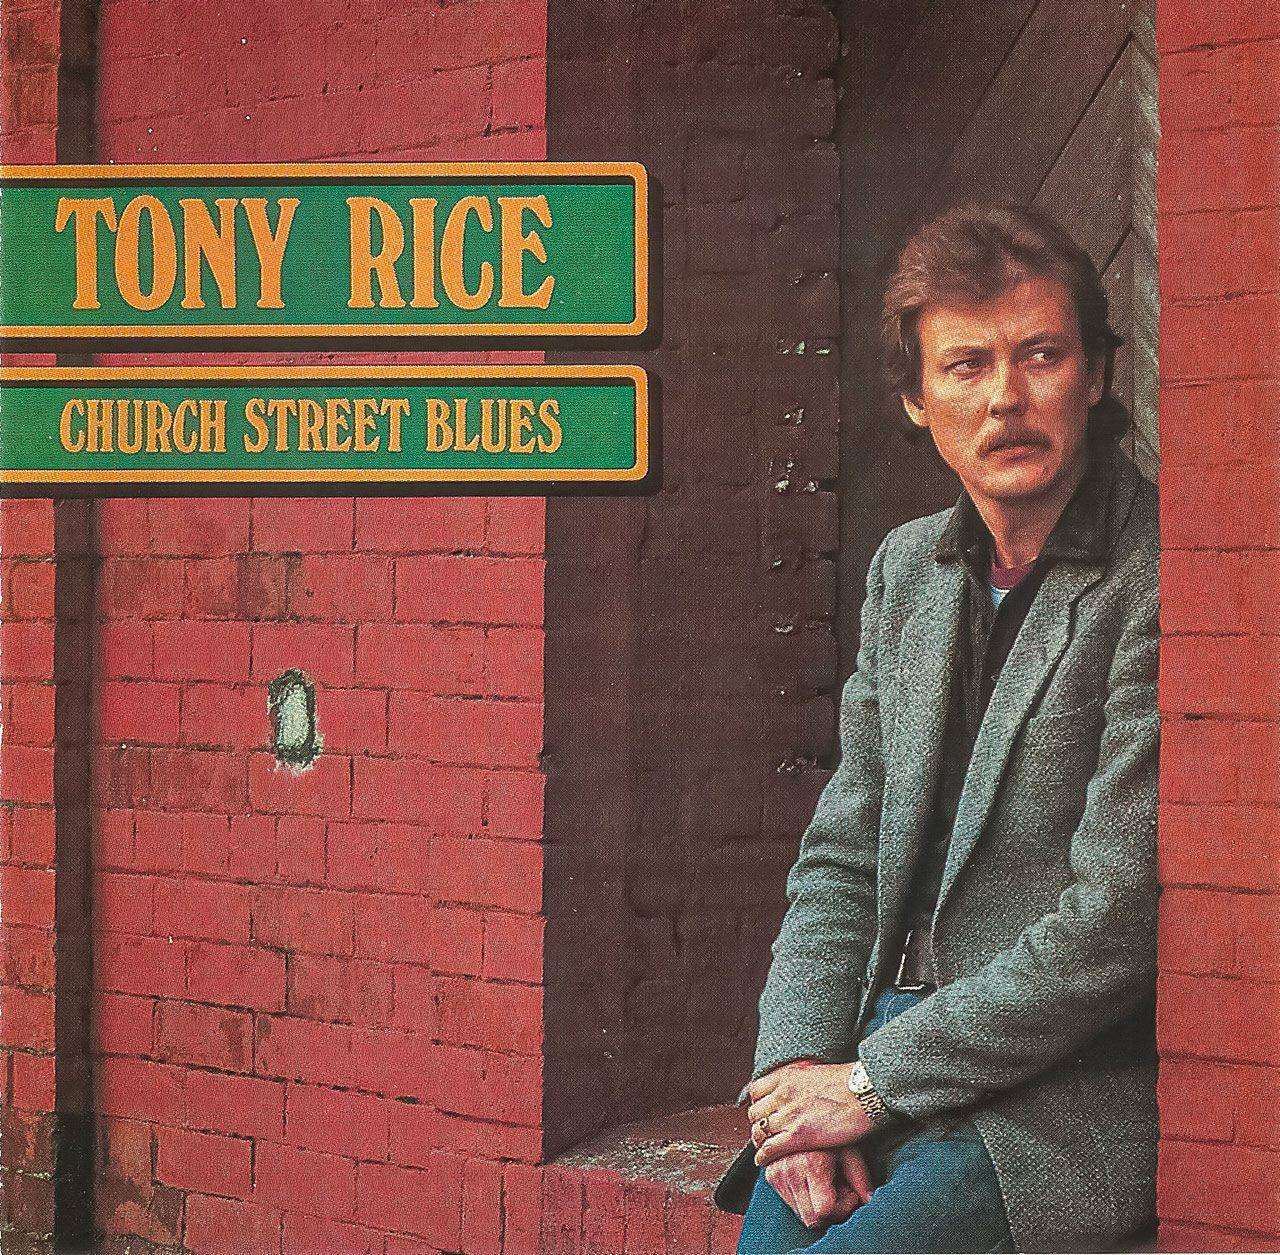 Tony Rice - Church Street Blues cover album